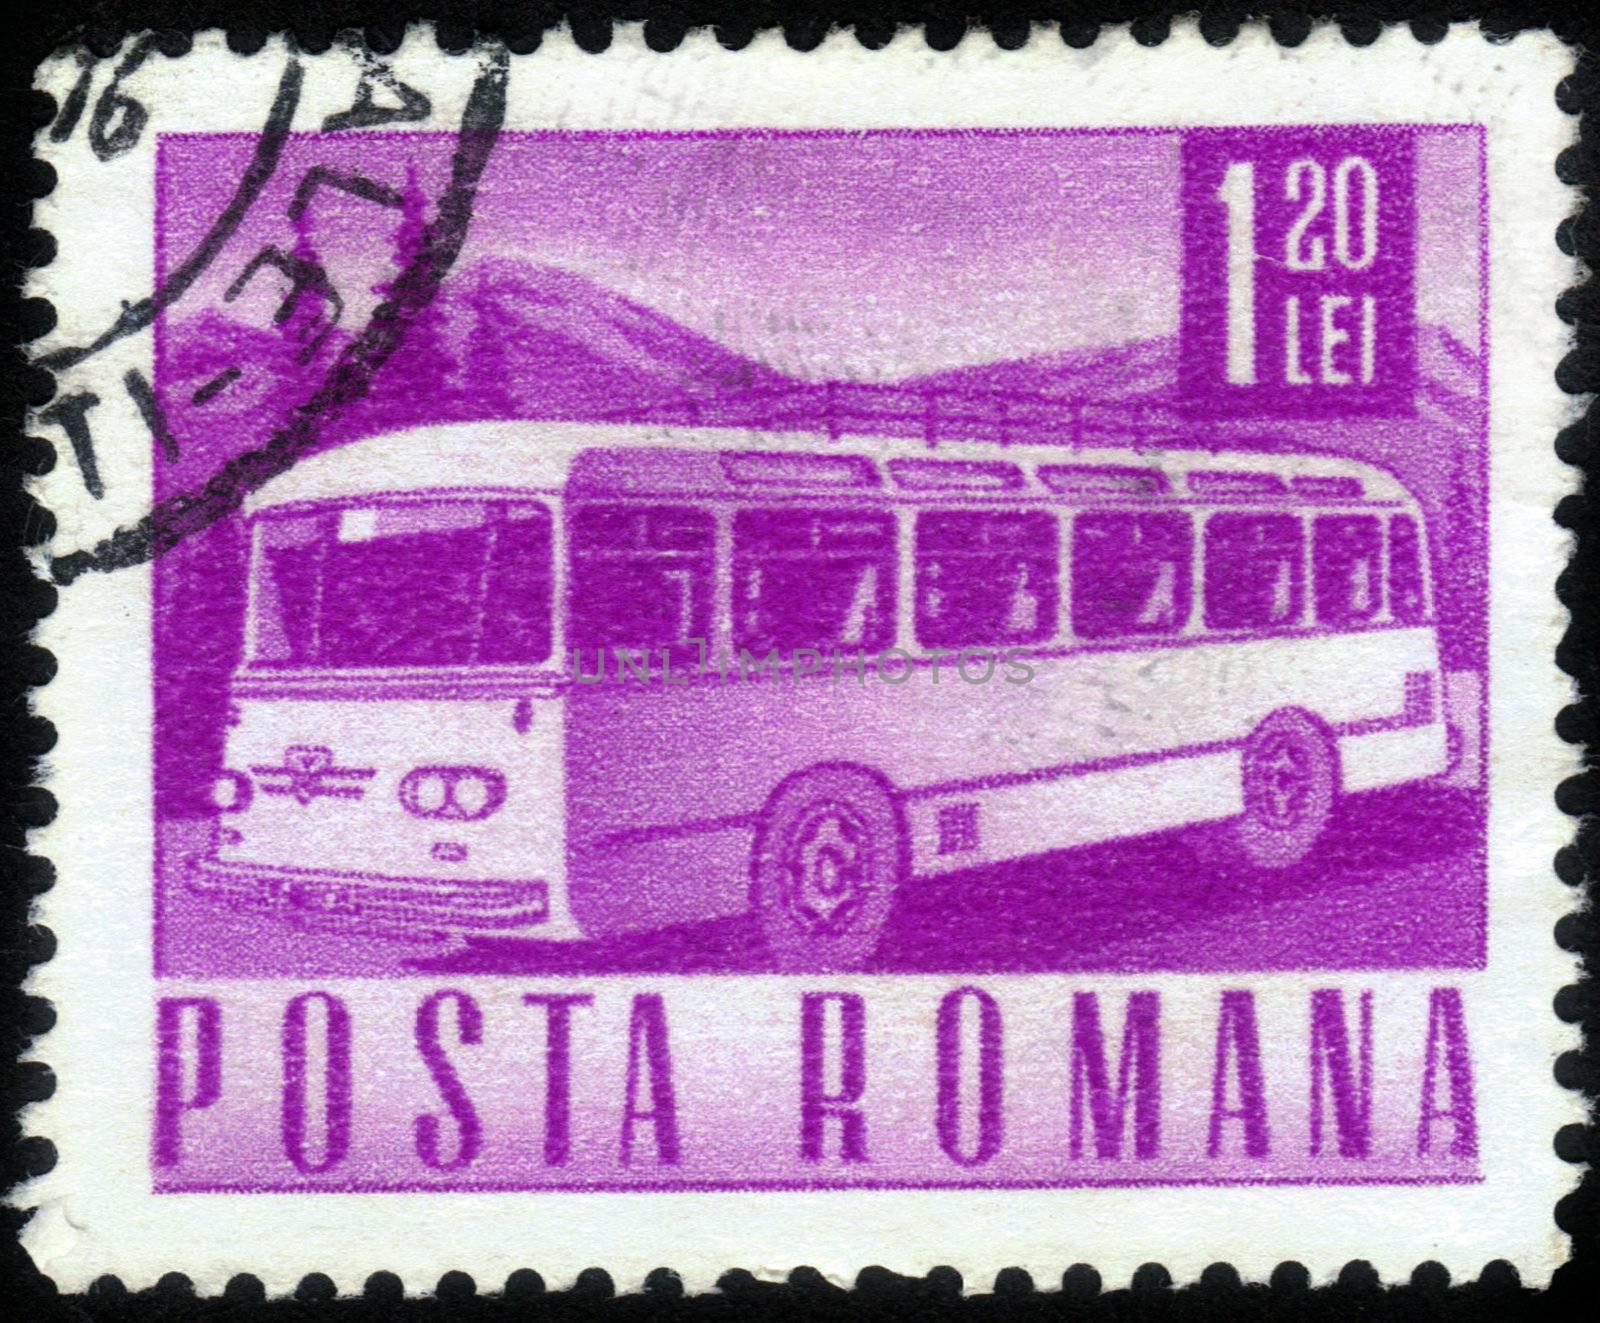 ROMANIA - CIRCA 1967: A stamp printed in Romania shows retro bus, circa 1967